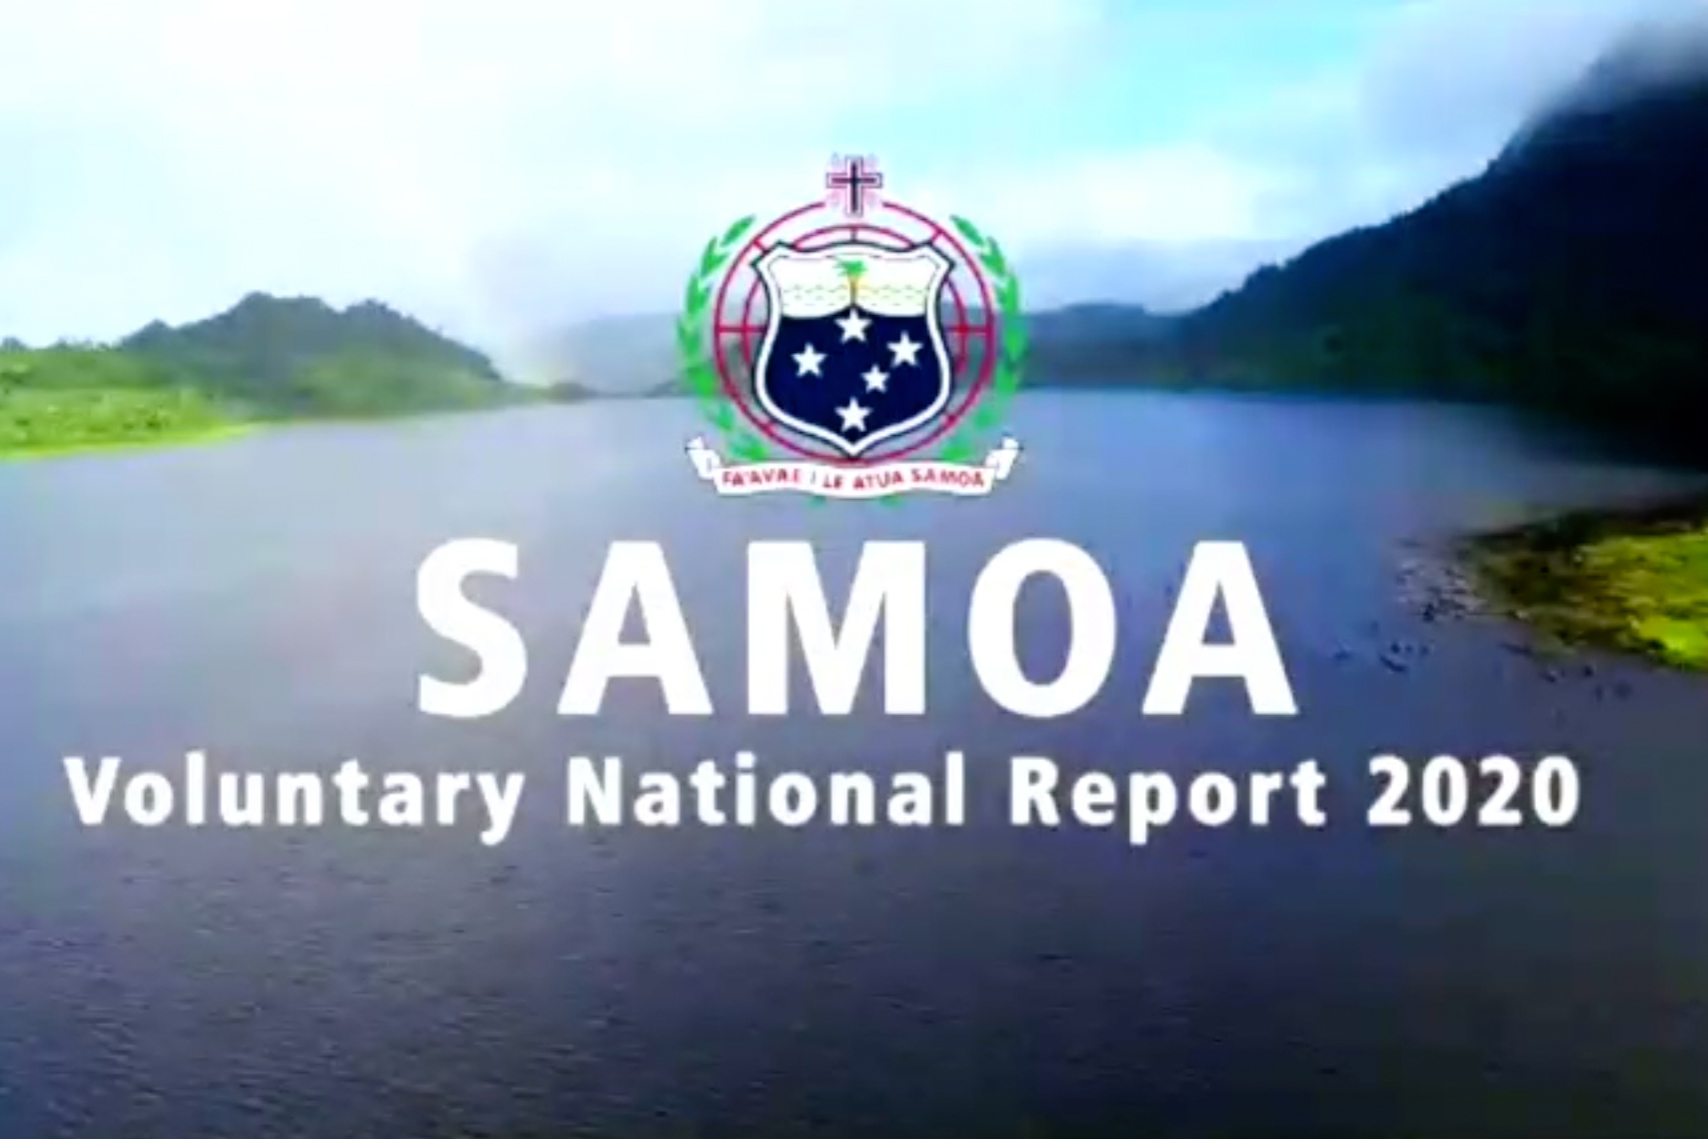 A VNR from Samoa was presented via video by Fiame Naomi Mataafa, Deputy Prime Minister of Samoa.